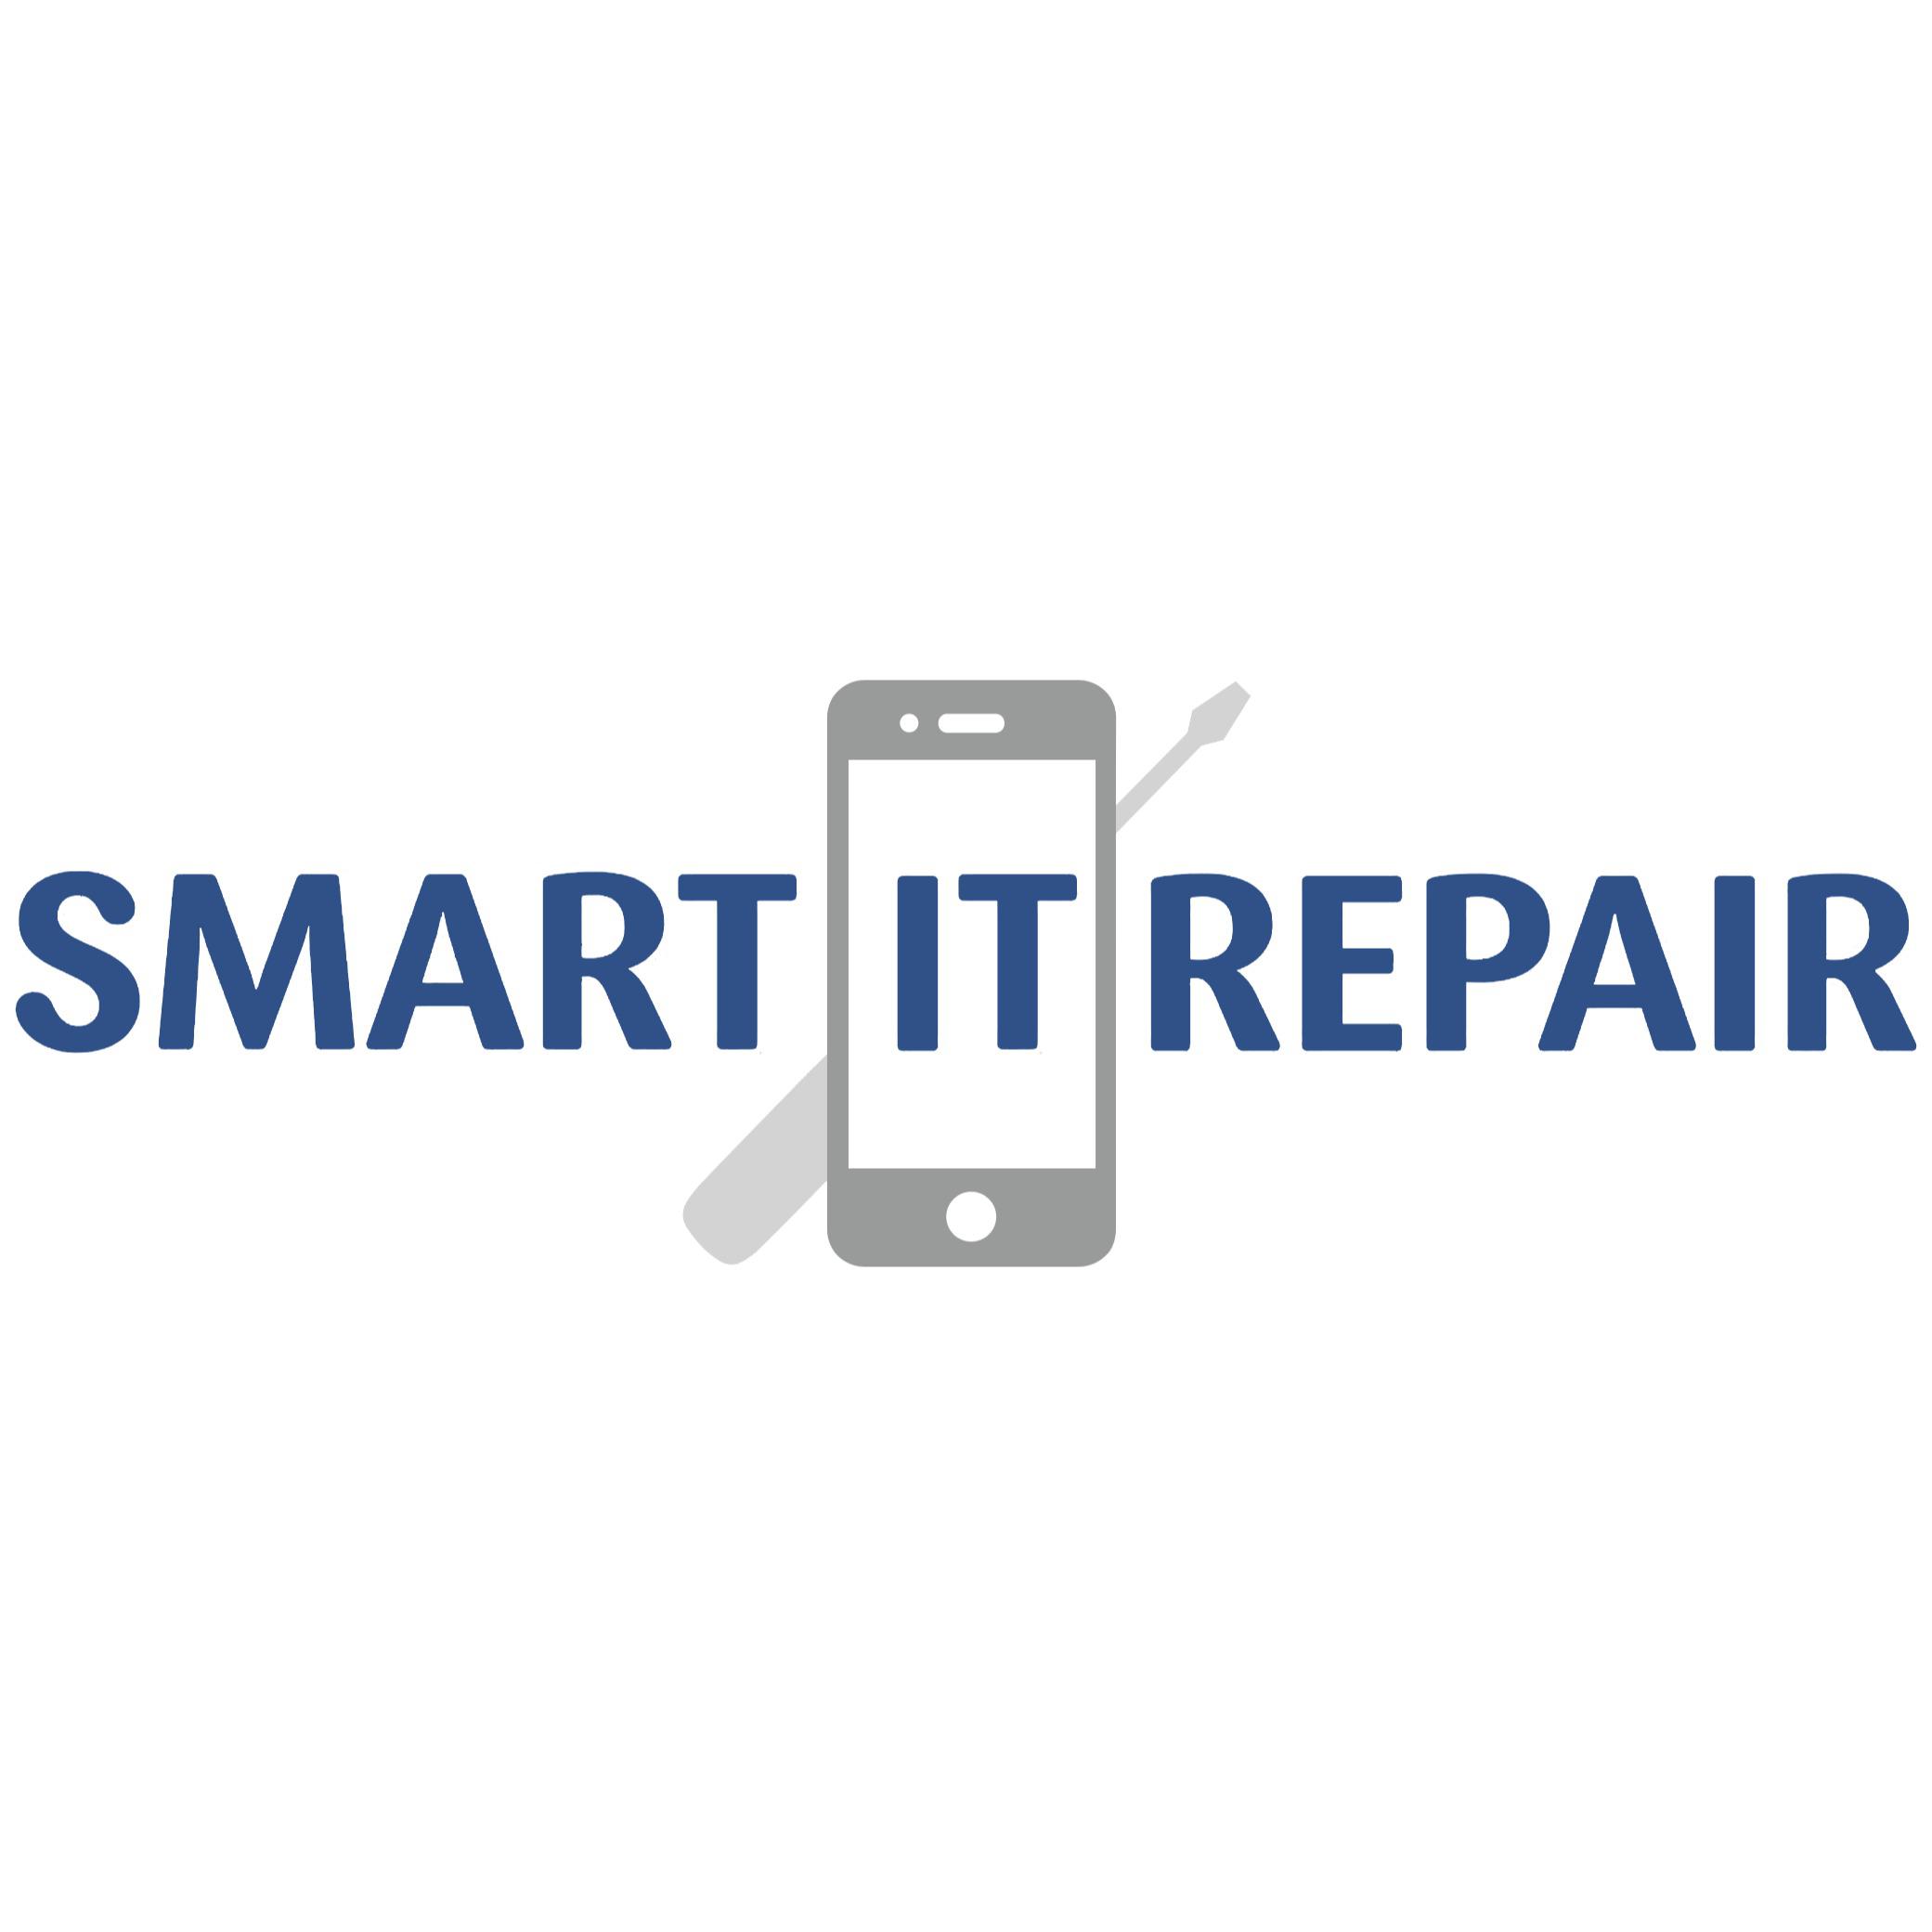 Smart IT Repair in Konz - Logo